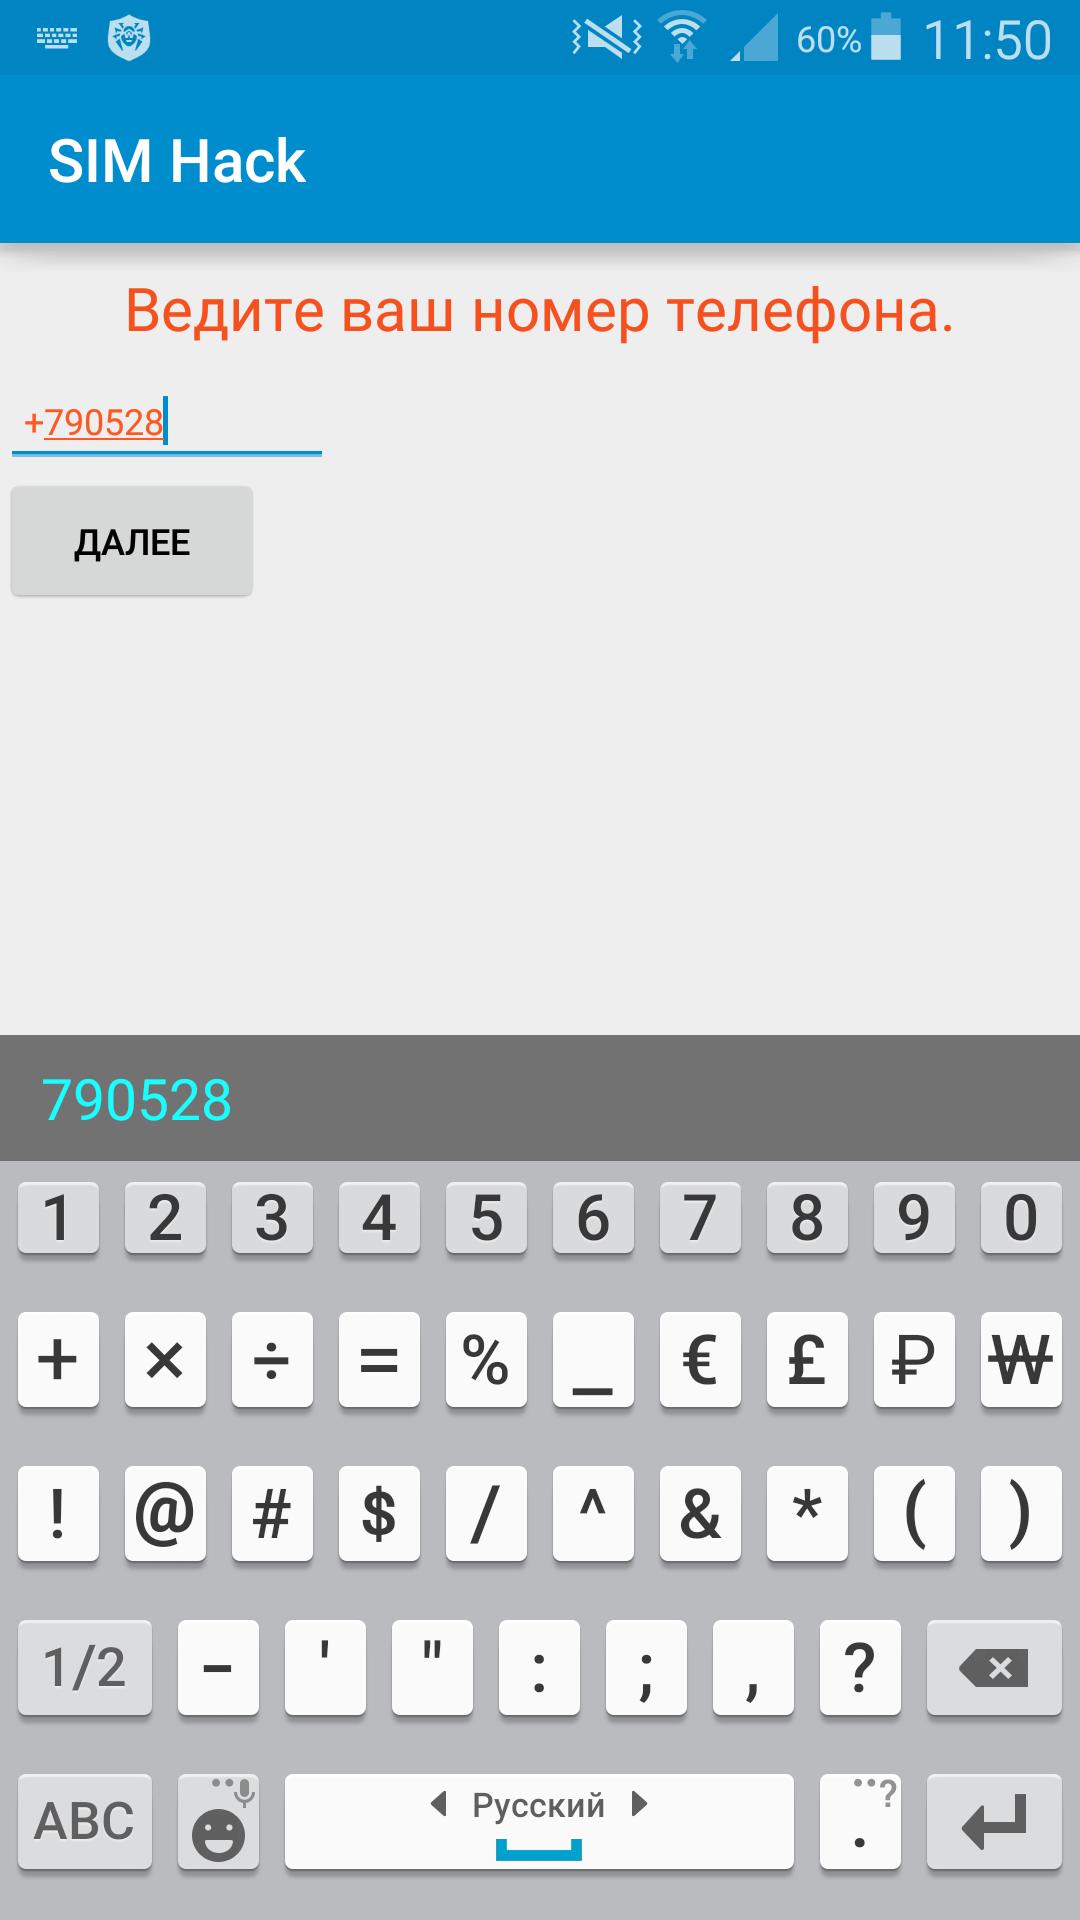 Sim Hack For Android Apk Download - roblox texting simulator hack download